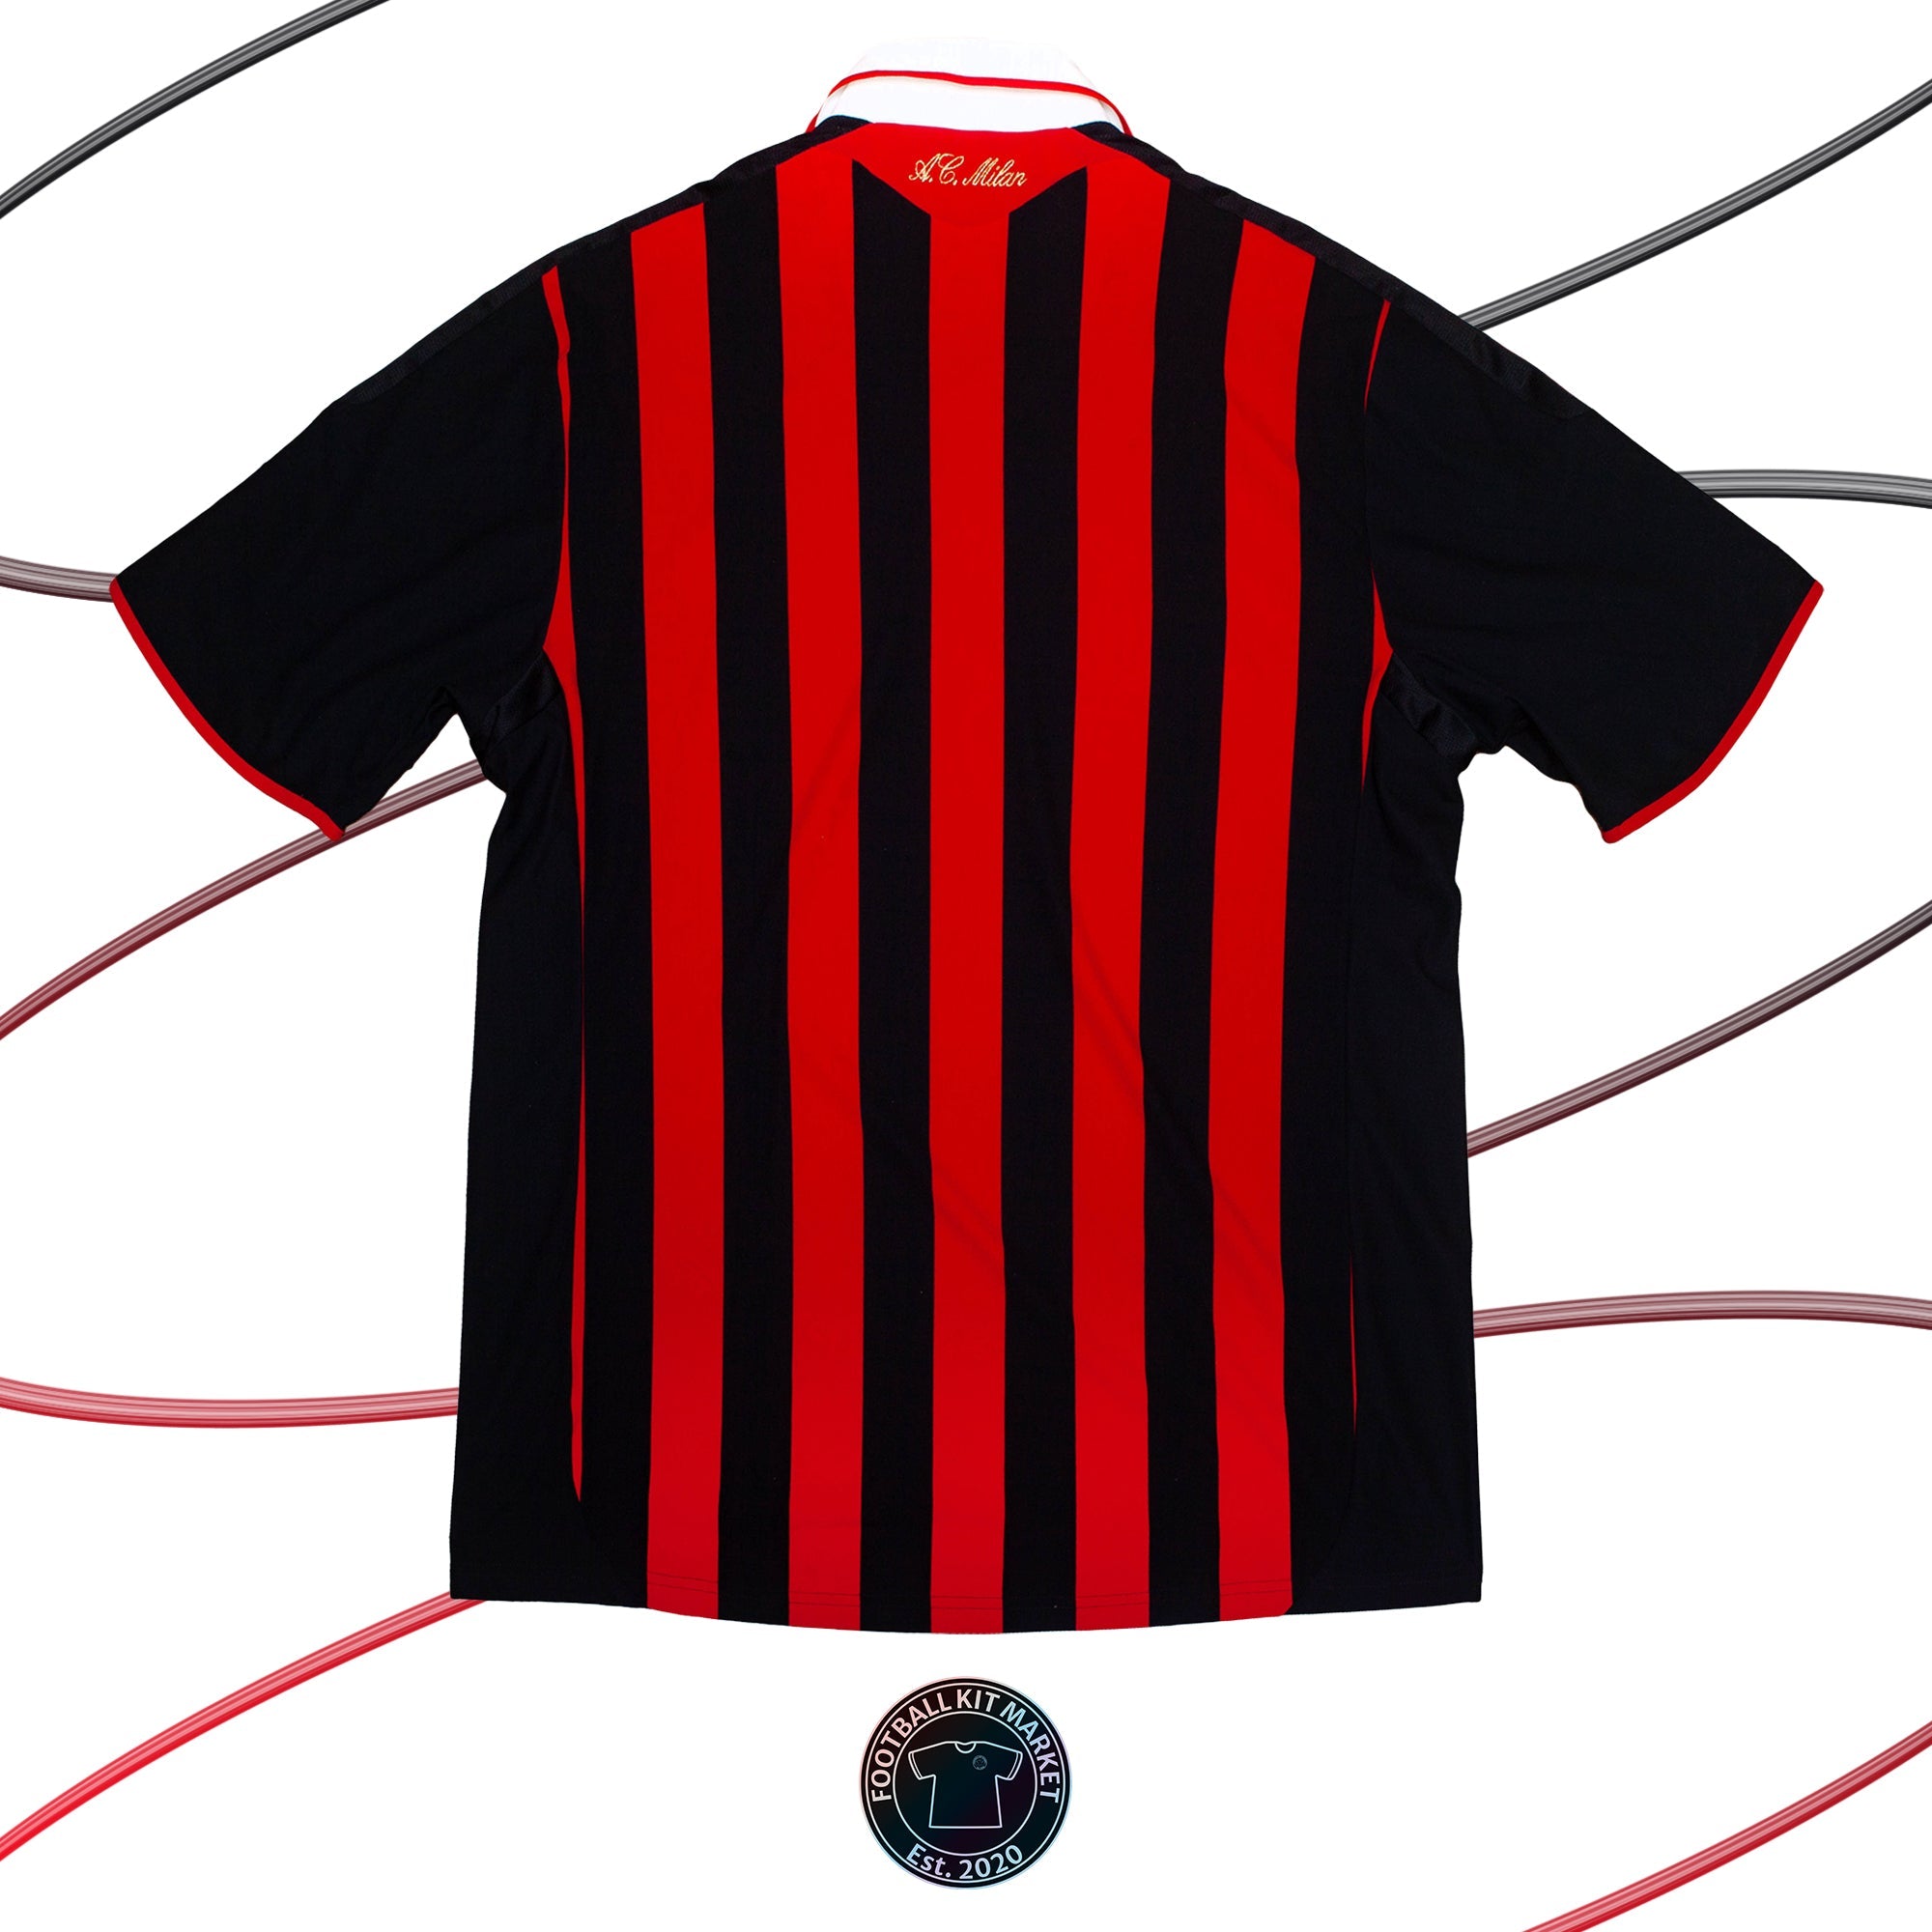 Genuine AC MILAN Home Shirt (2009-2010) - ADIDAS (XL) - Product Image from Football Kit Market